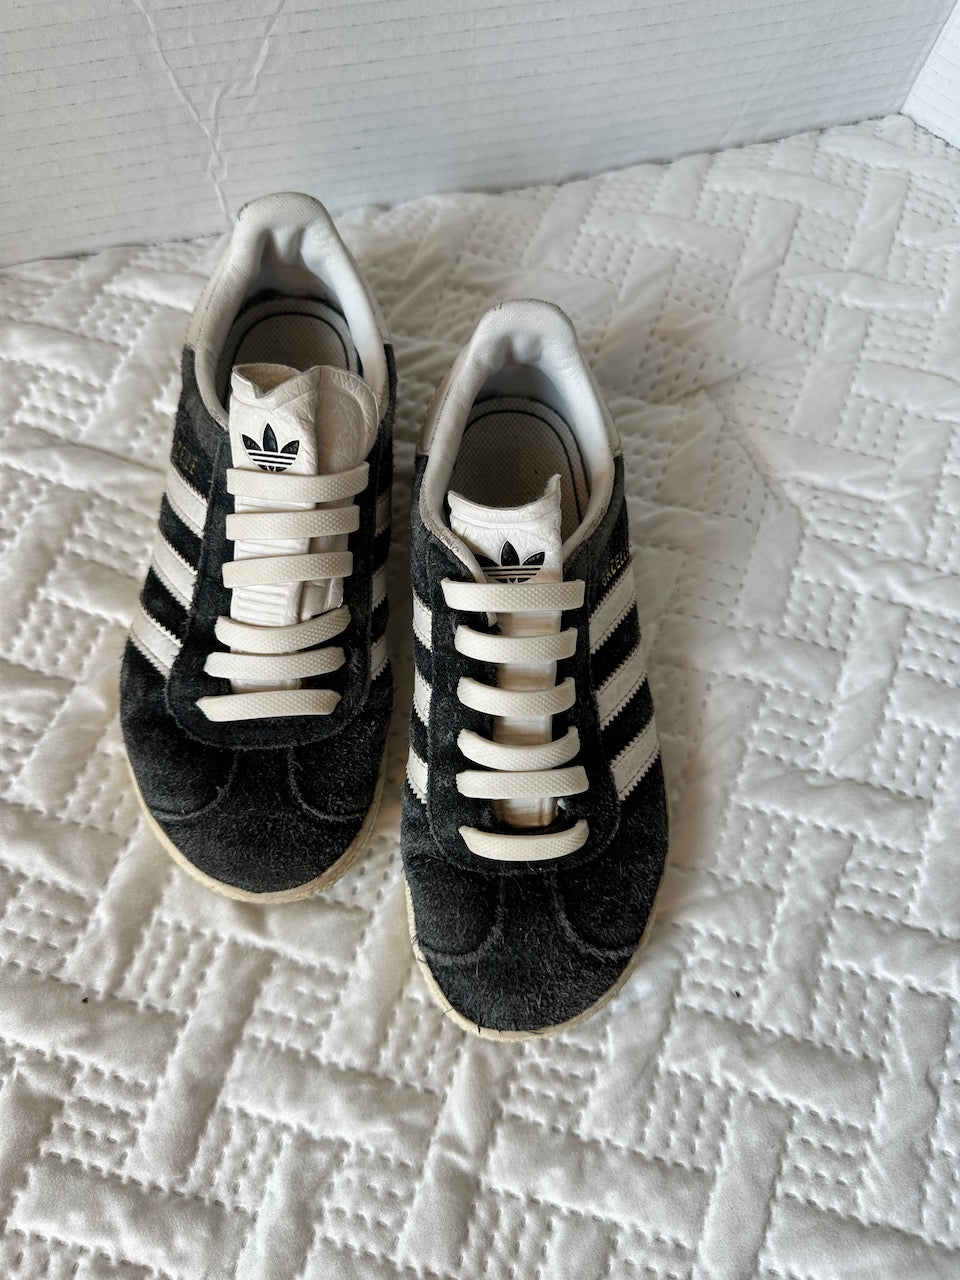 Boys Shoes size 13, Adidas Gazelle Black suede, GUC, 45230